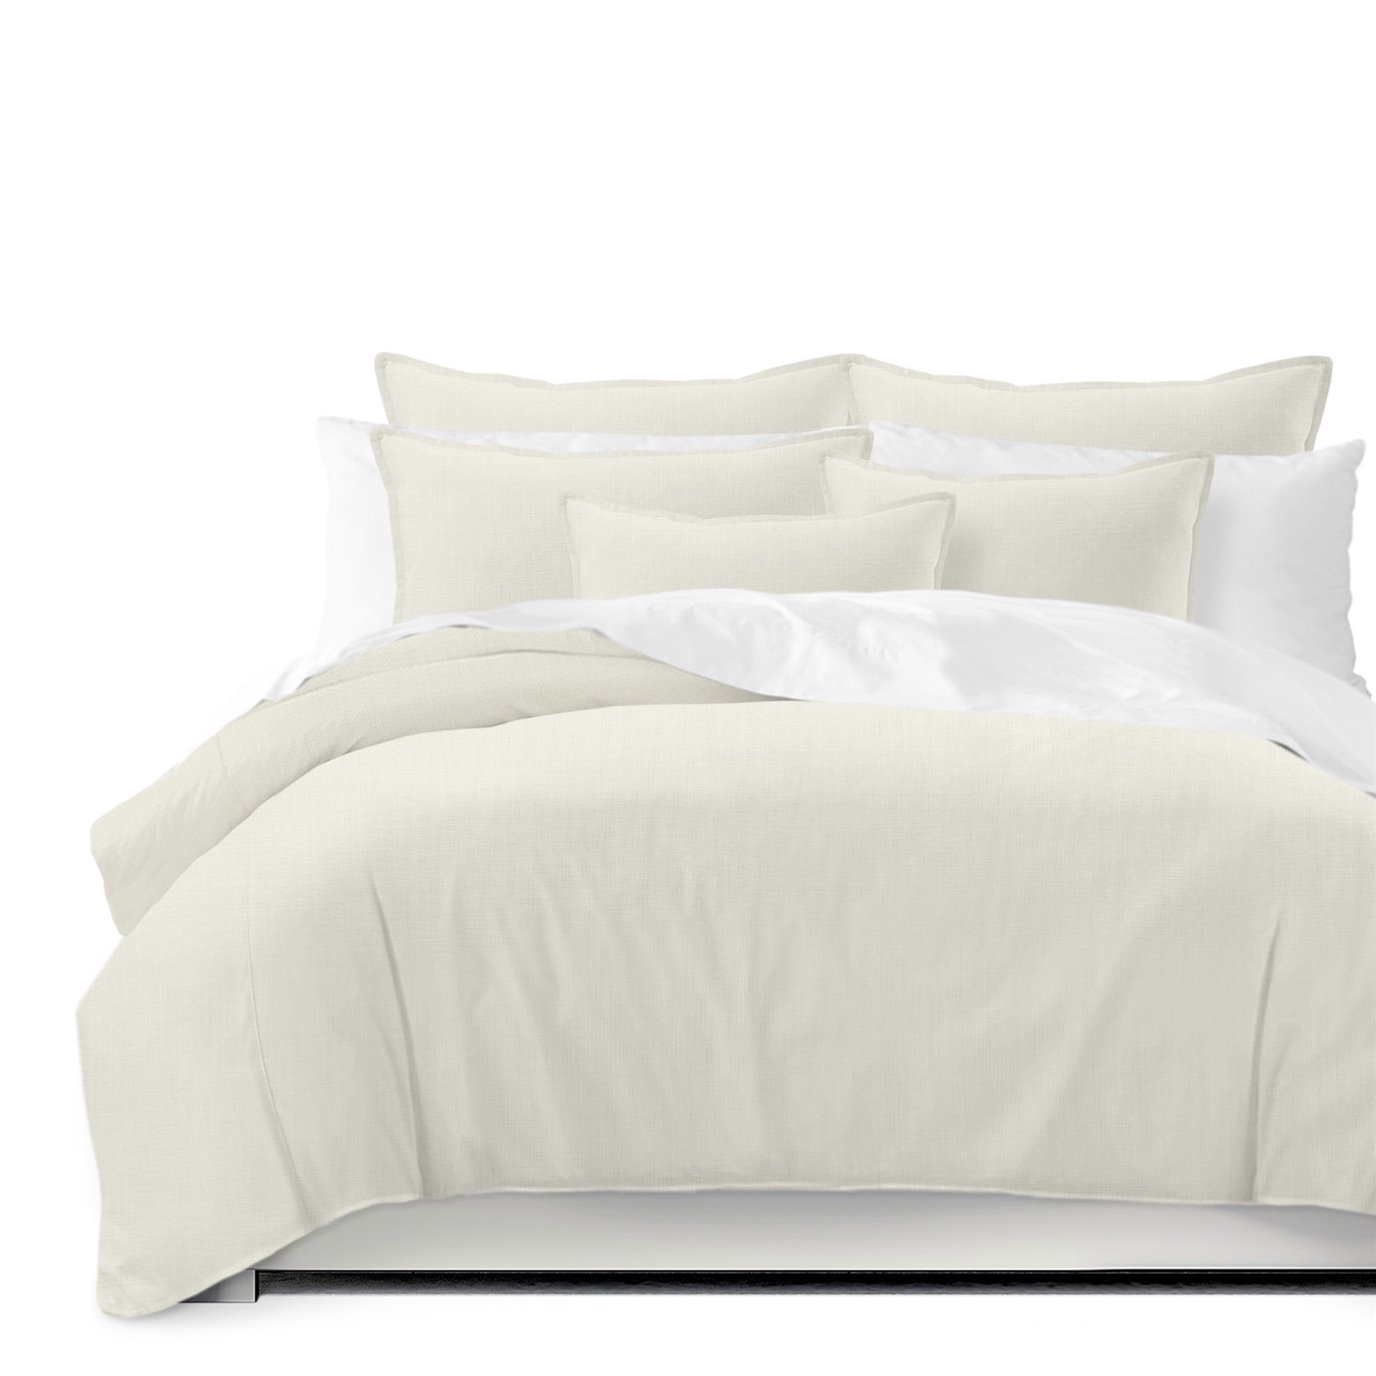 Ancebridge Vanilla Coverlet and Pillow Sham(s) Set - Size King / California King